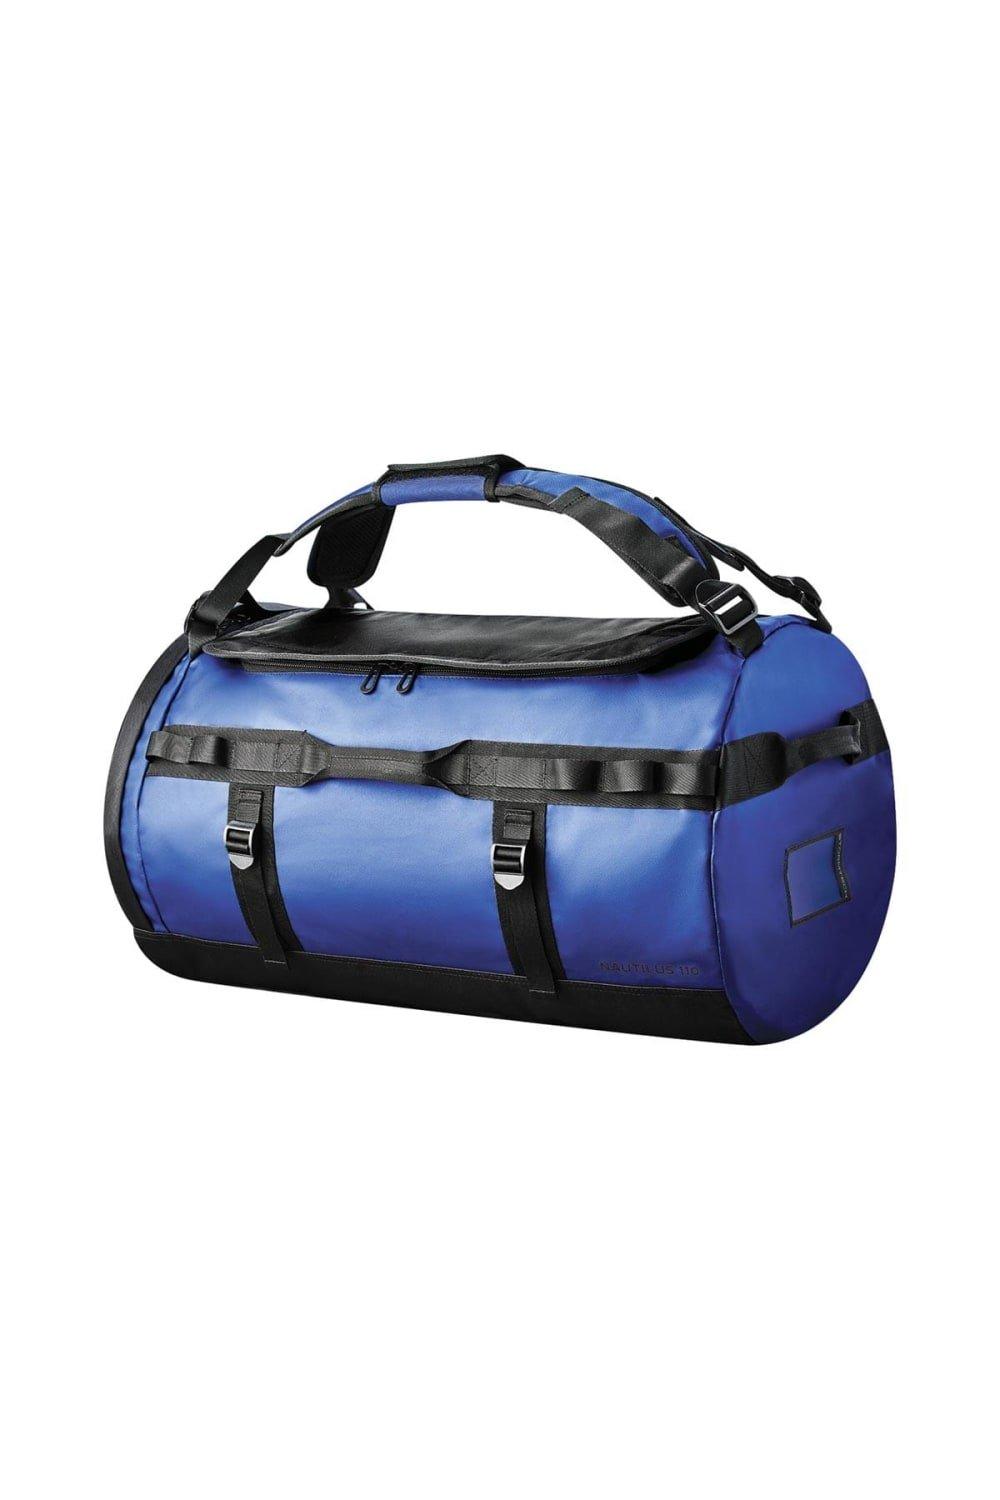 Nautilus 110 Waterproof Duffle Bag